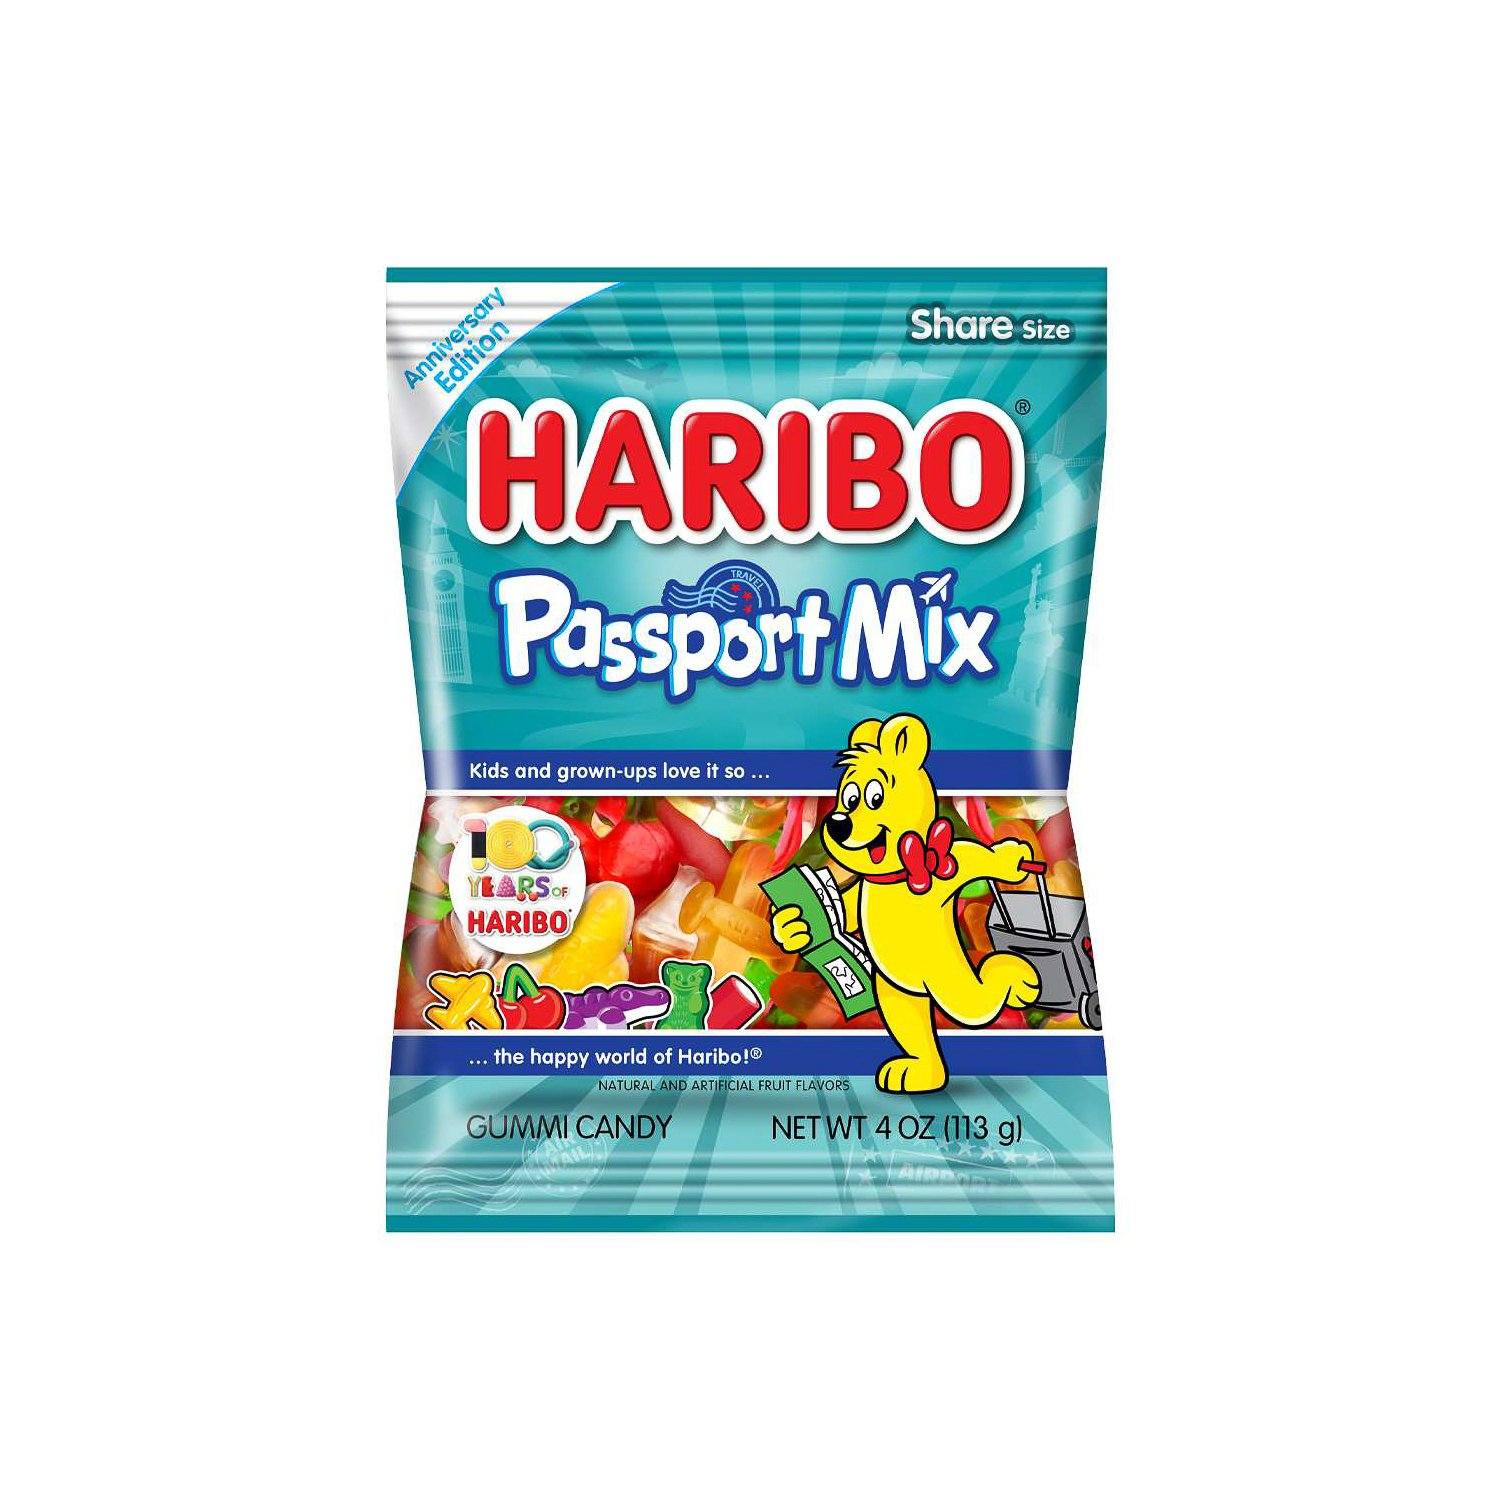 Haribo Gummi Candies Meltable Haribo Passport Mix 5 Ounce 